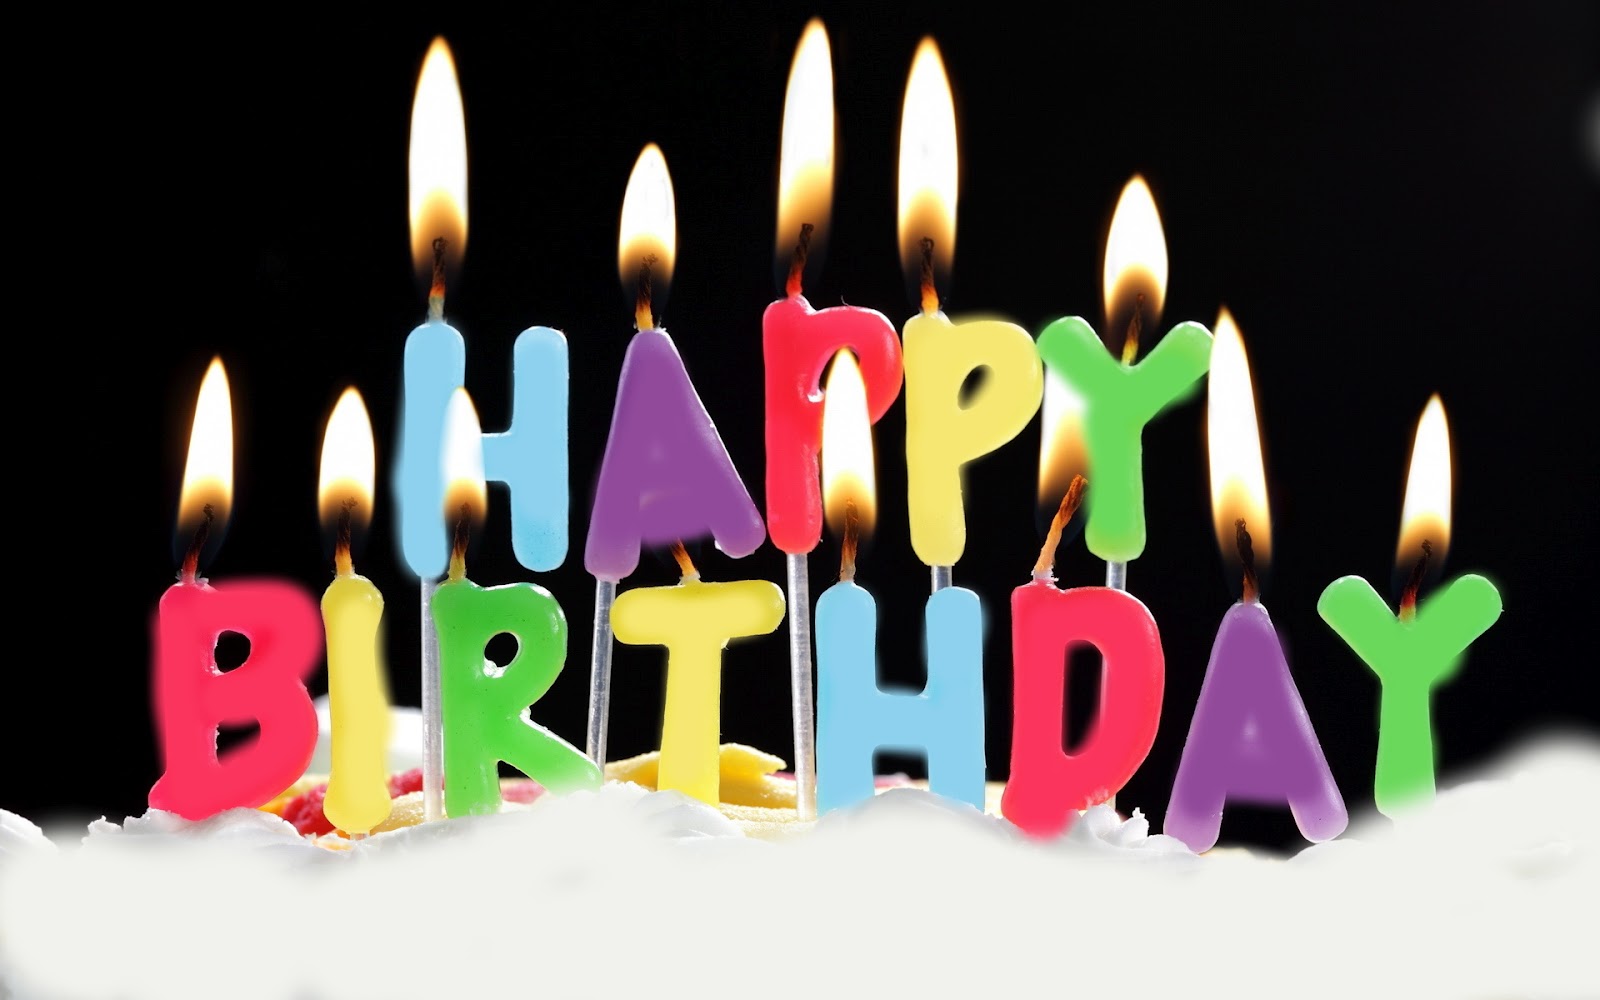 Happy-Birthday-cake-and-candles_1920x1200.jpg